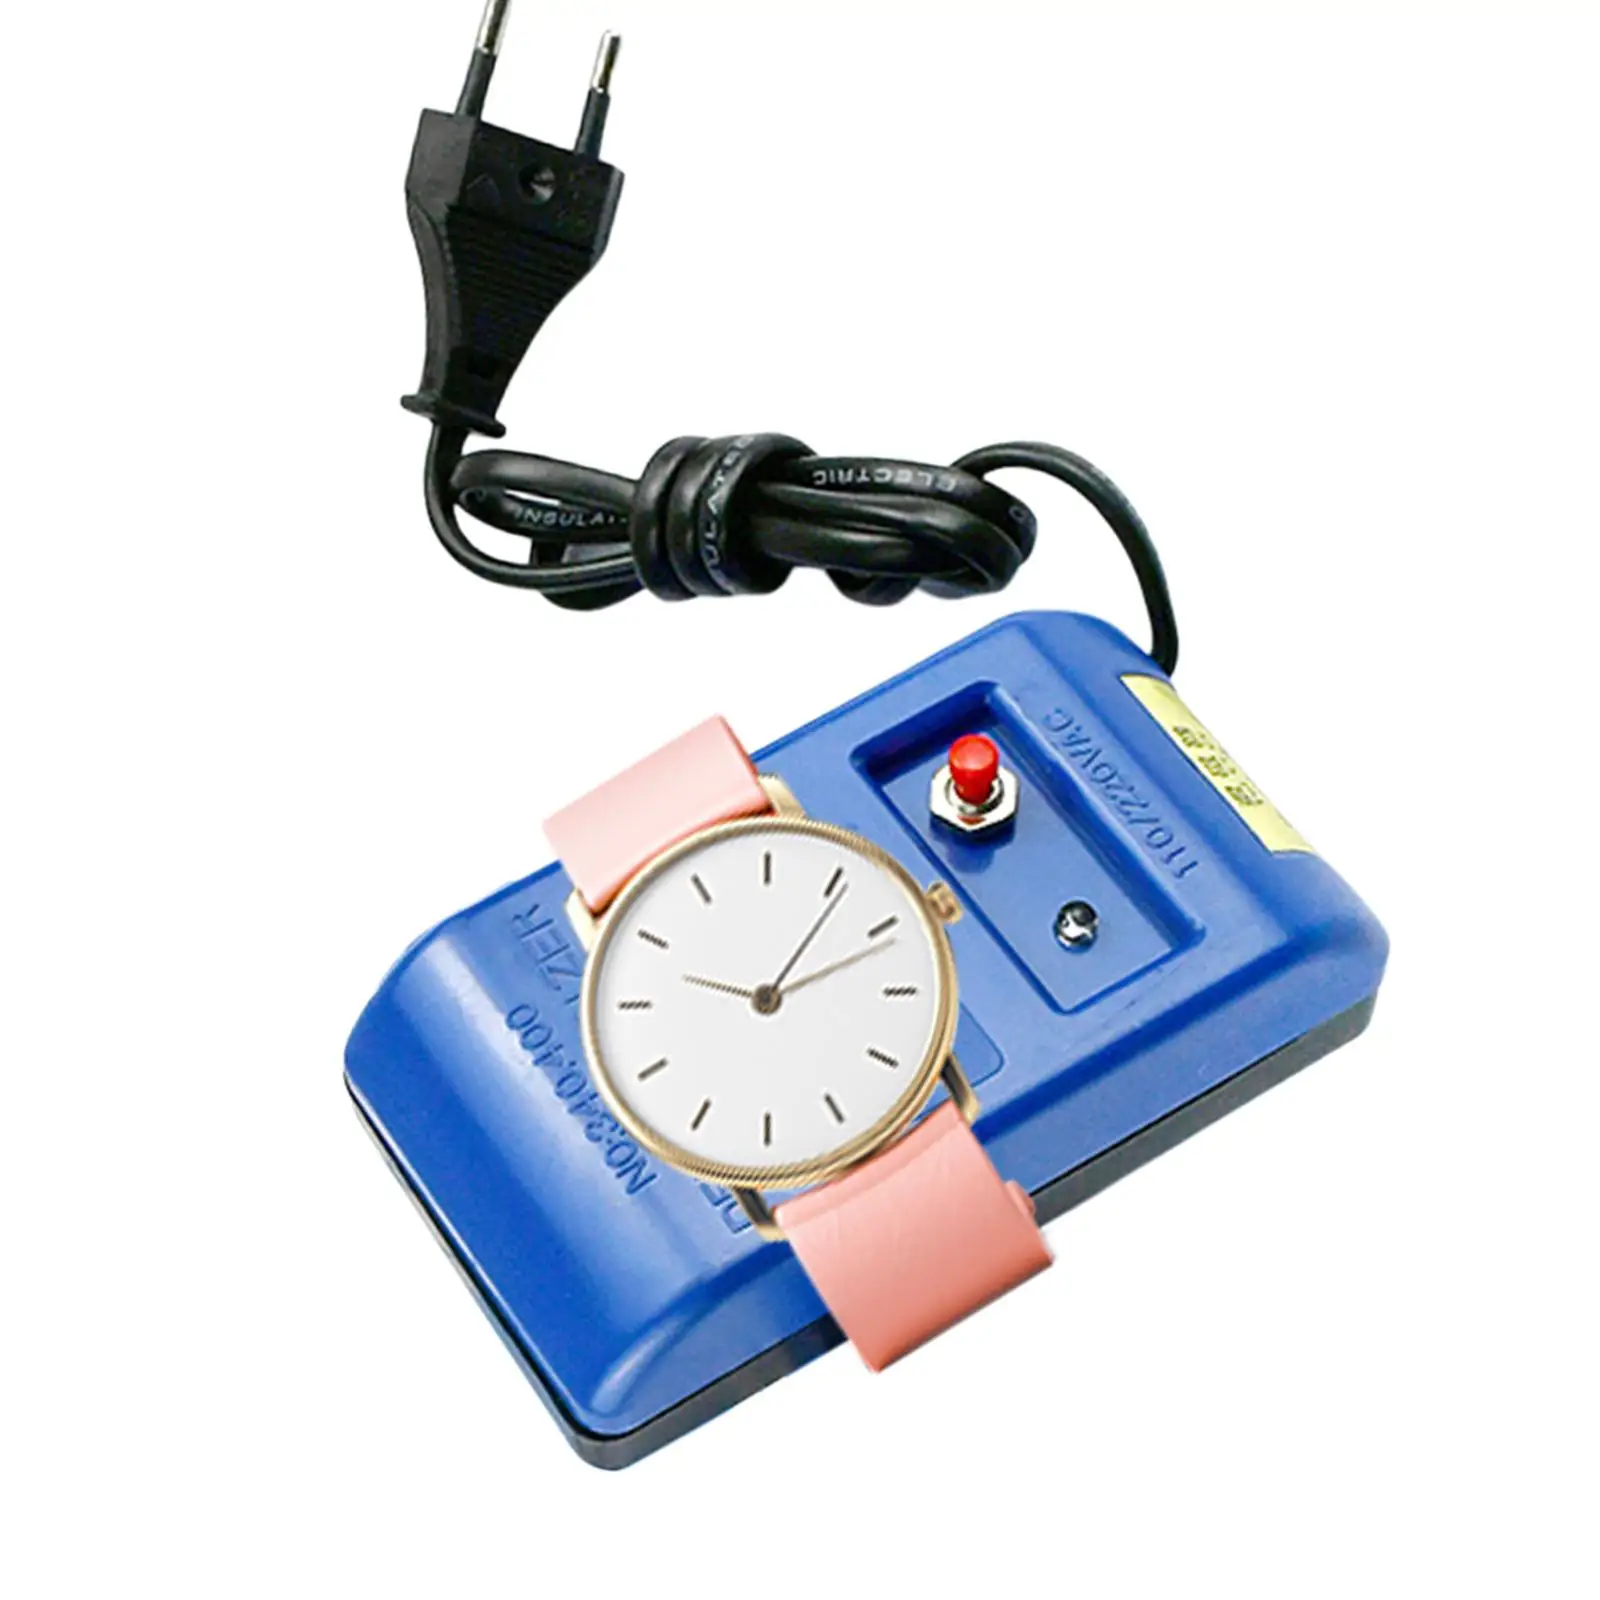 Watch Demagnetizer EU Plug Watch Repair Degaussing Tool for Watch Watch